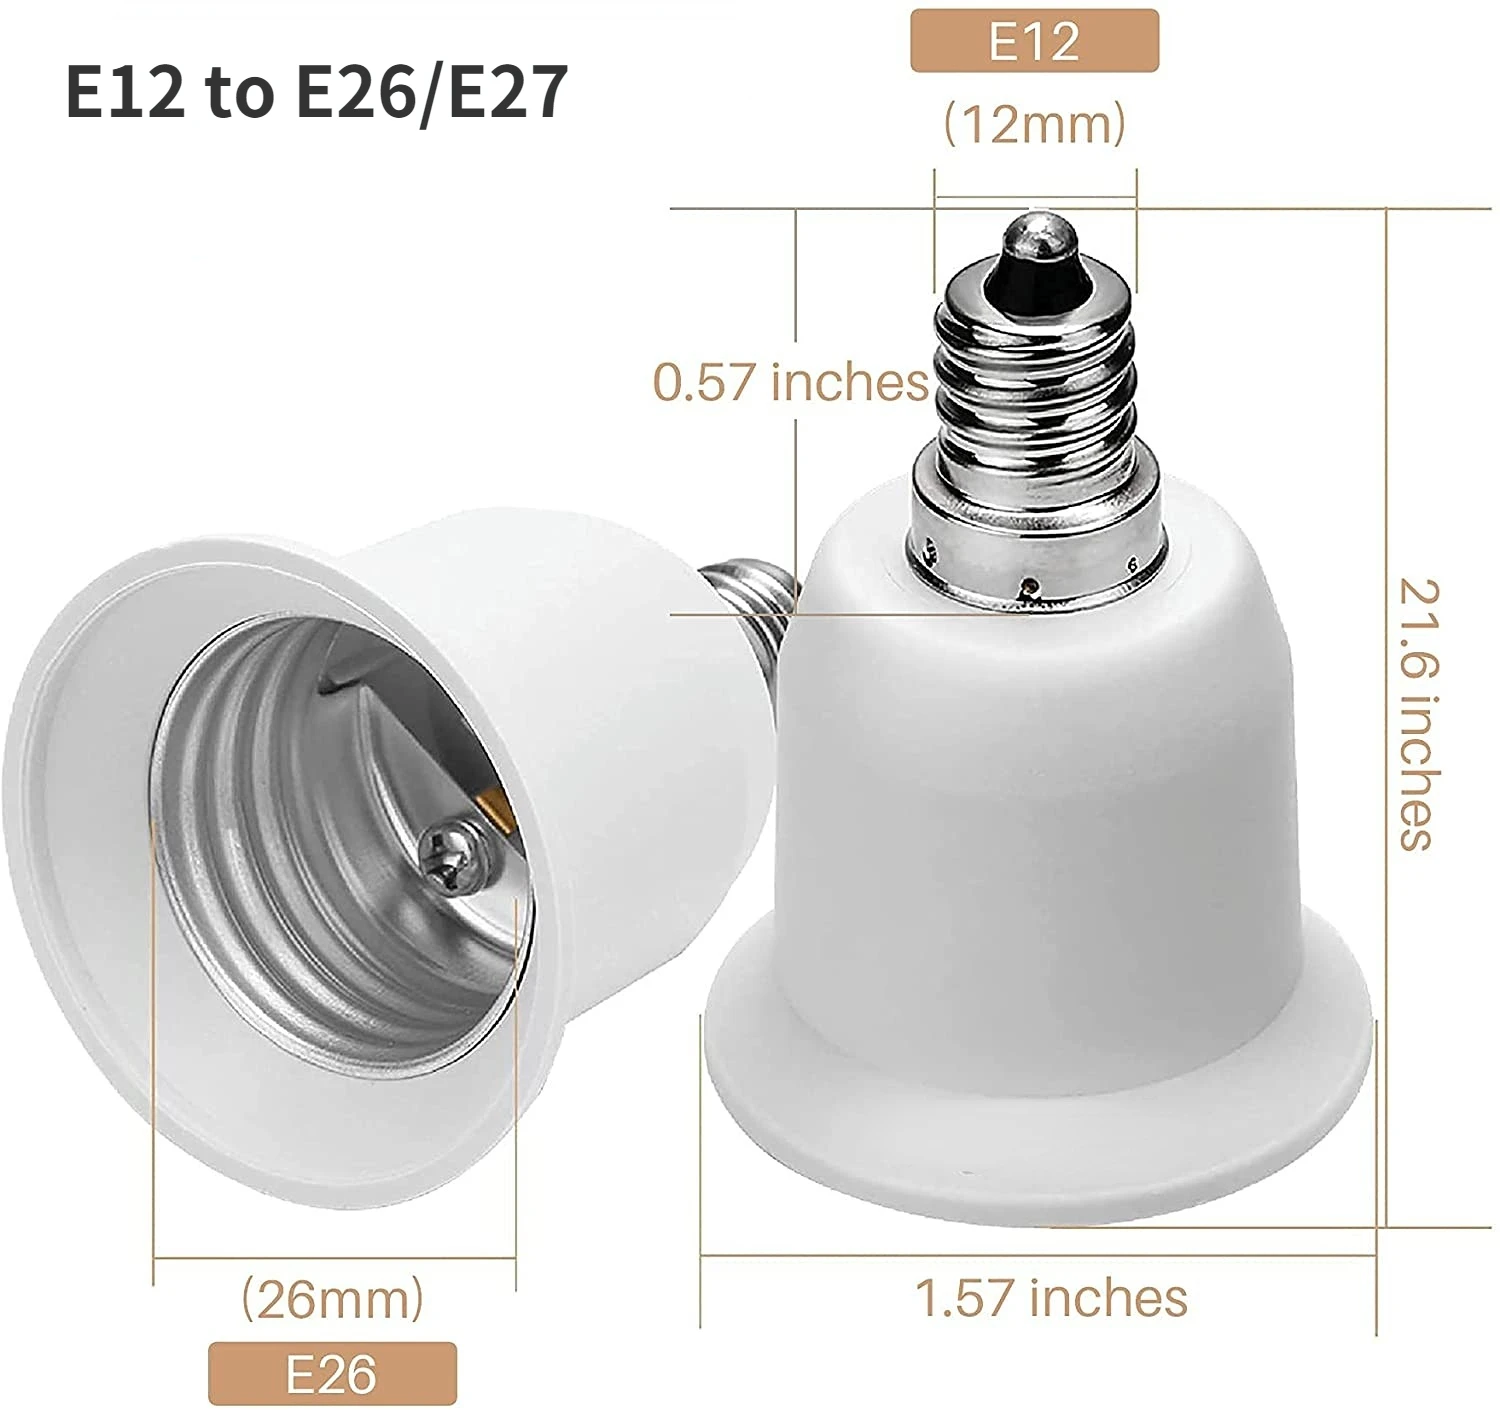 Keel Overjas Ongeautoriseerd E27 e12 e14 gx24 gu24 g4 g6.35 mr16 eu stekker lamp bases gloeilamp adapter  converters lampfitting| | - AliExpress